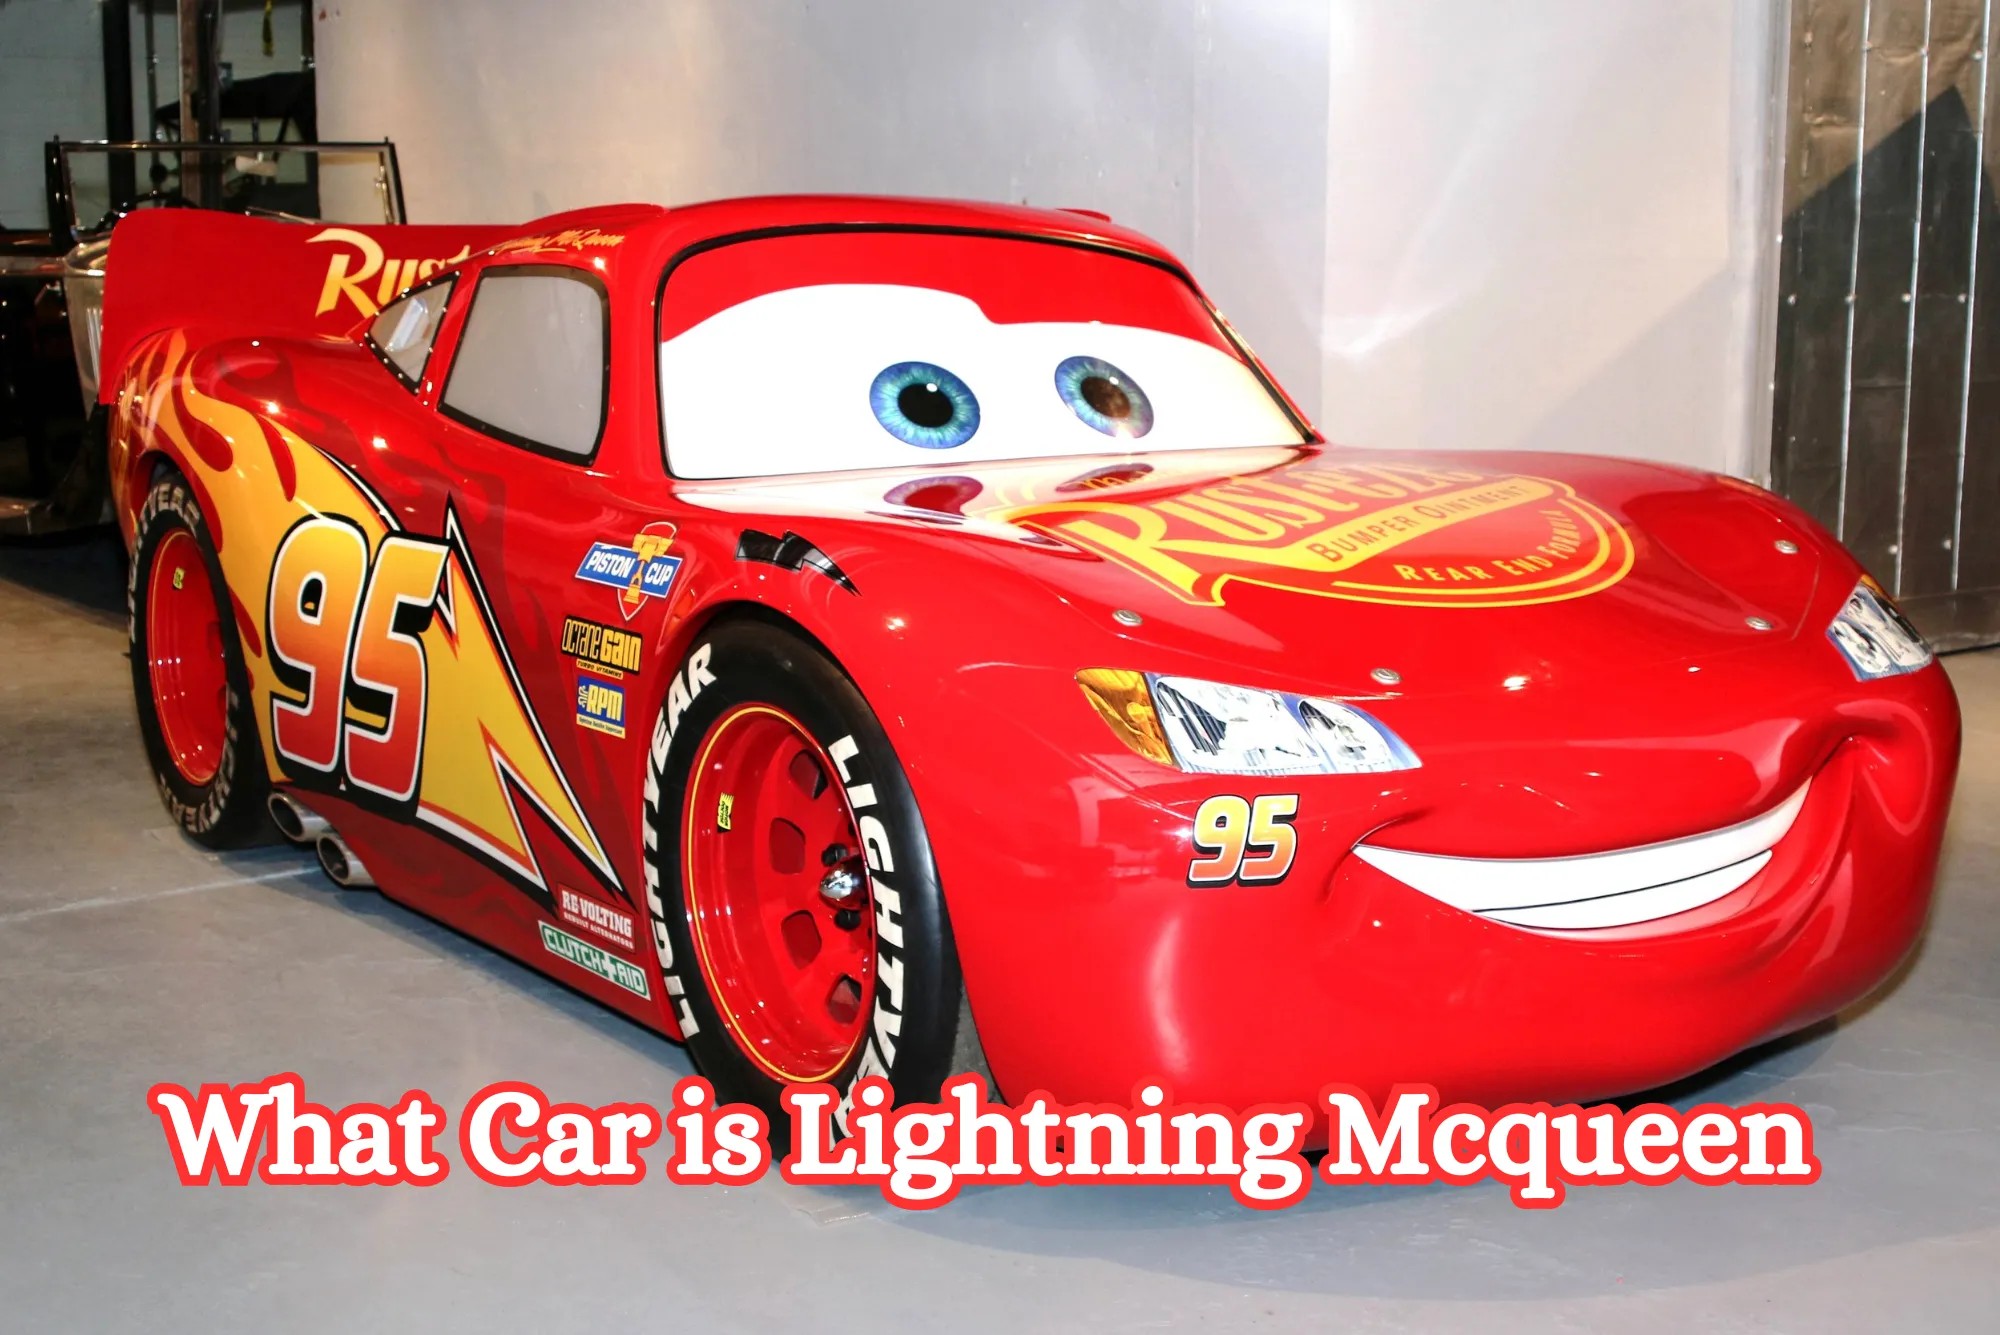 What Car is Lightning Mcqueen